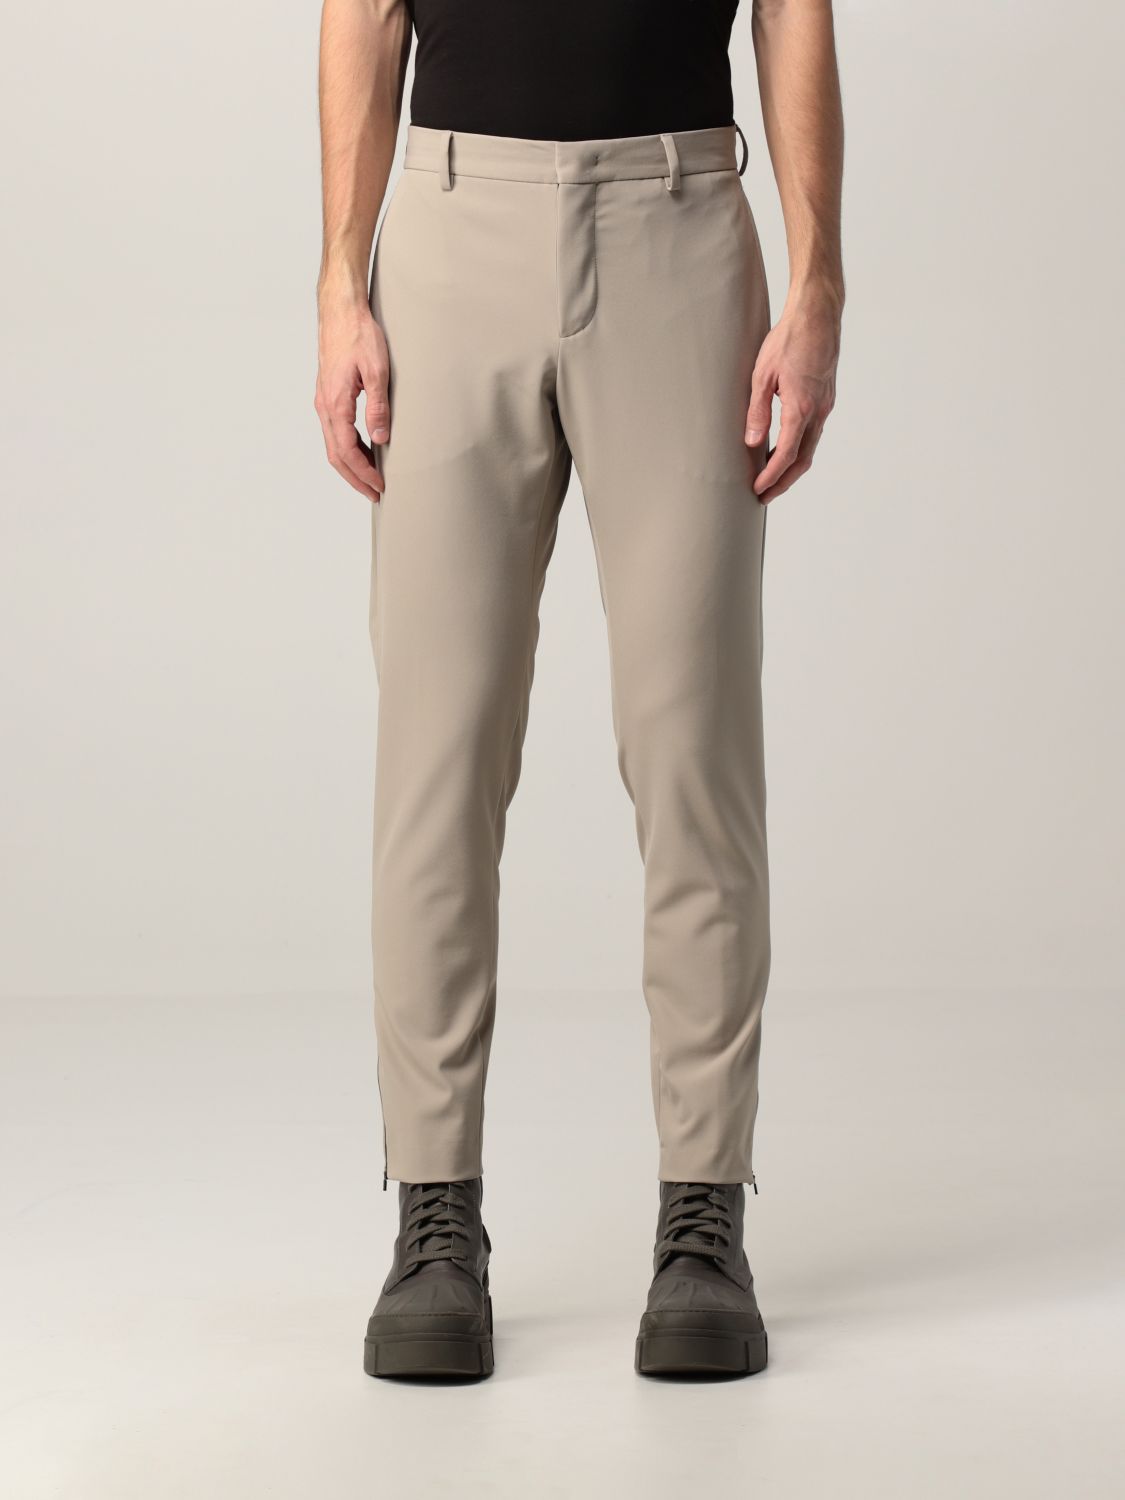 Pt Torino Outlet: pants for man - Grey 1 | Pt Torino pants ...